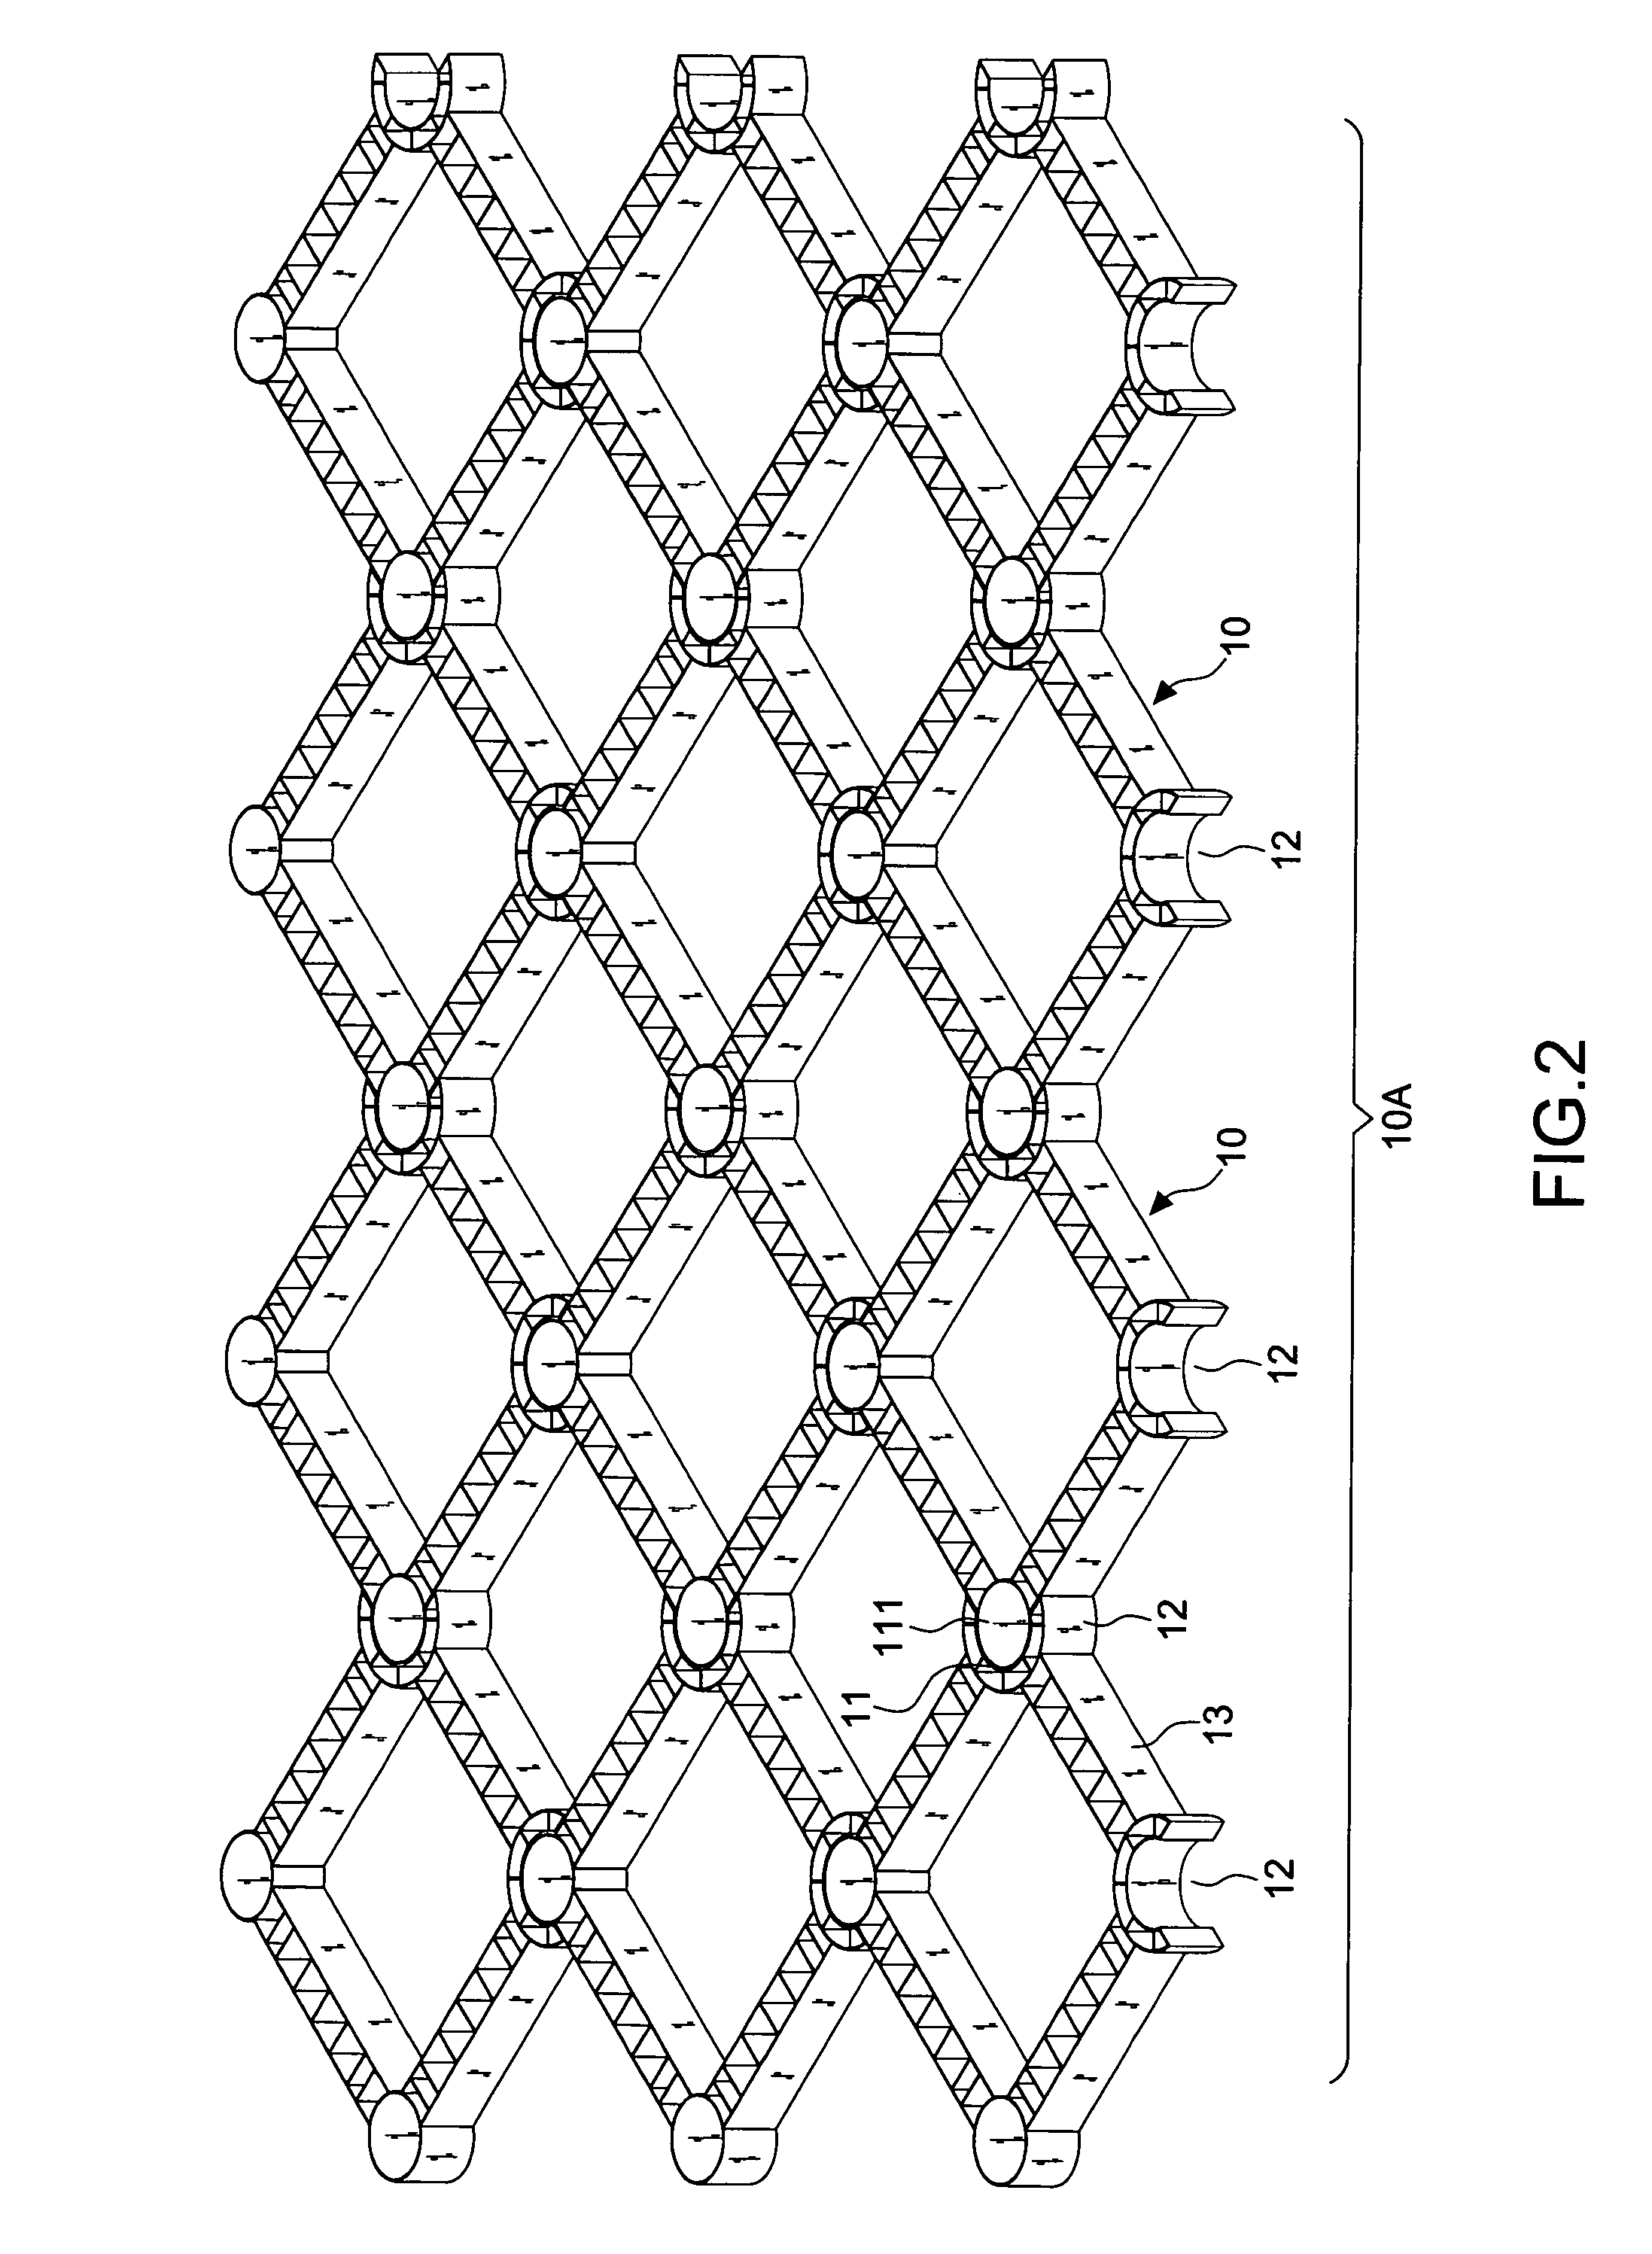 Tenon joint type space lattice structure